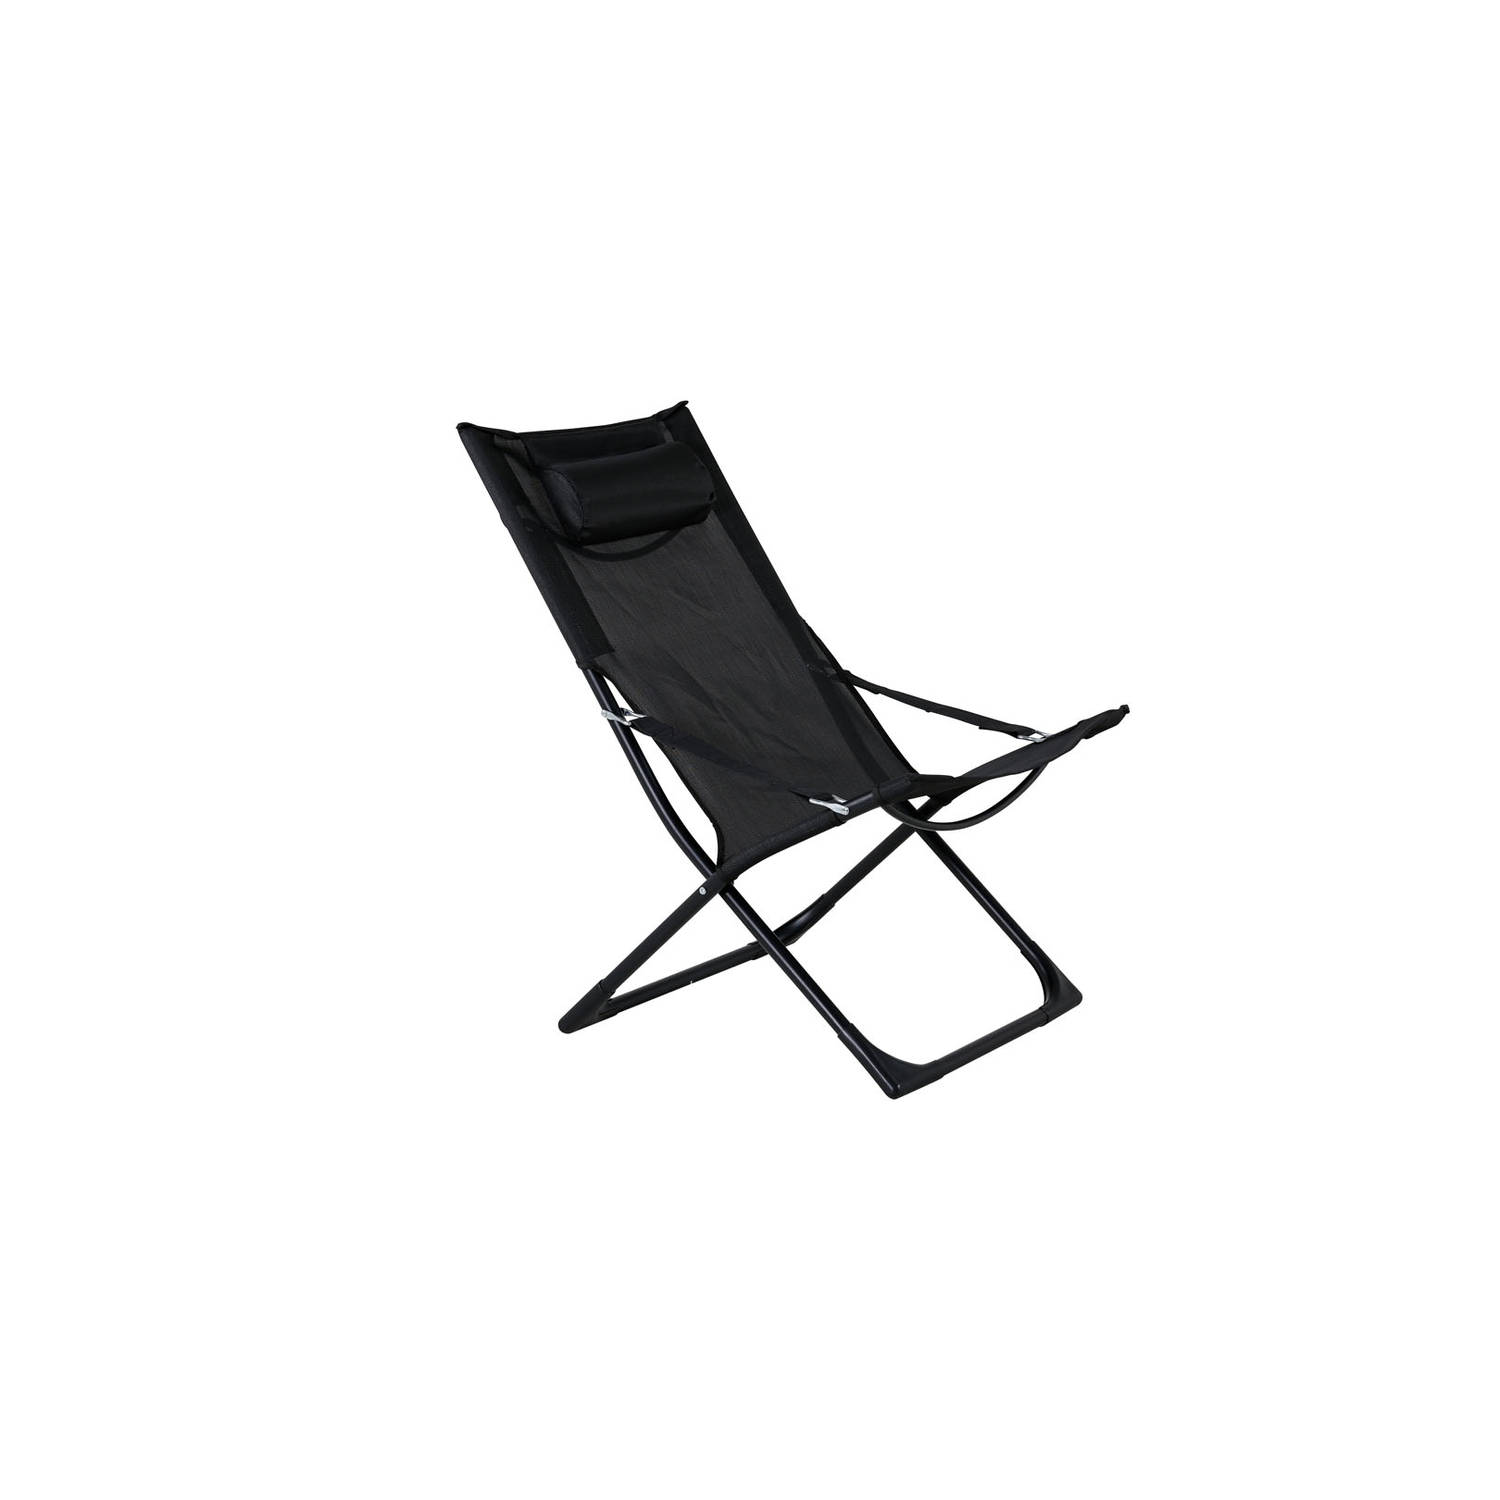 Hioshop Seville tuinligstoel, opvouwbare strandstoel zwart.